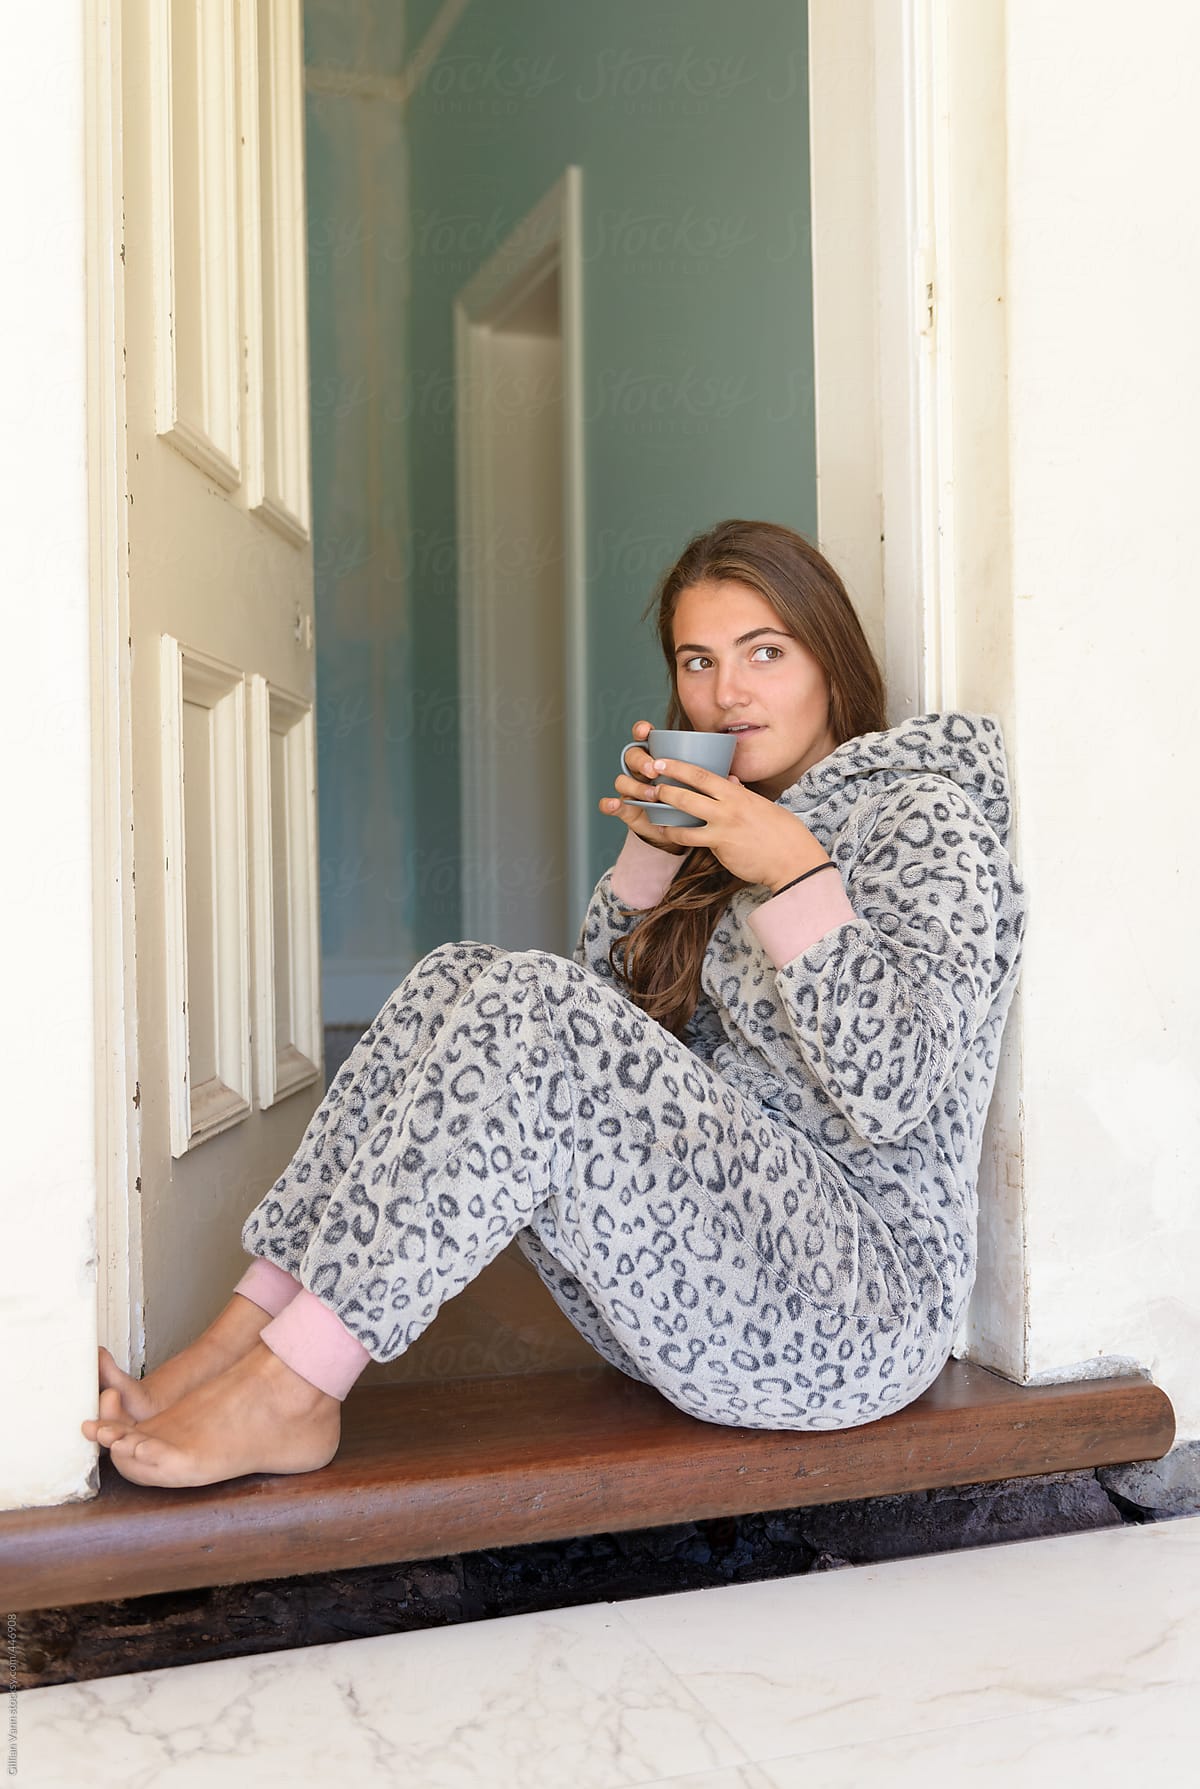 Young Woman Wearing A Onesie Pyjama Drinking Tea Or Coffee In The Doorway" by Contributor "Gillian Vann" - Stocksy